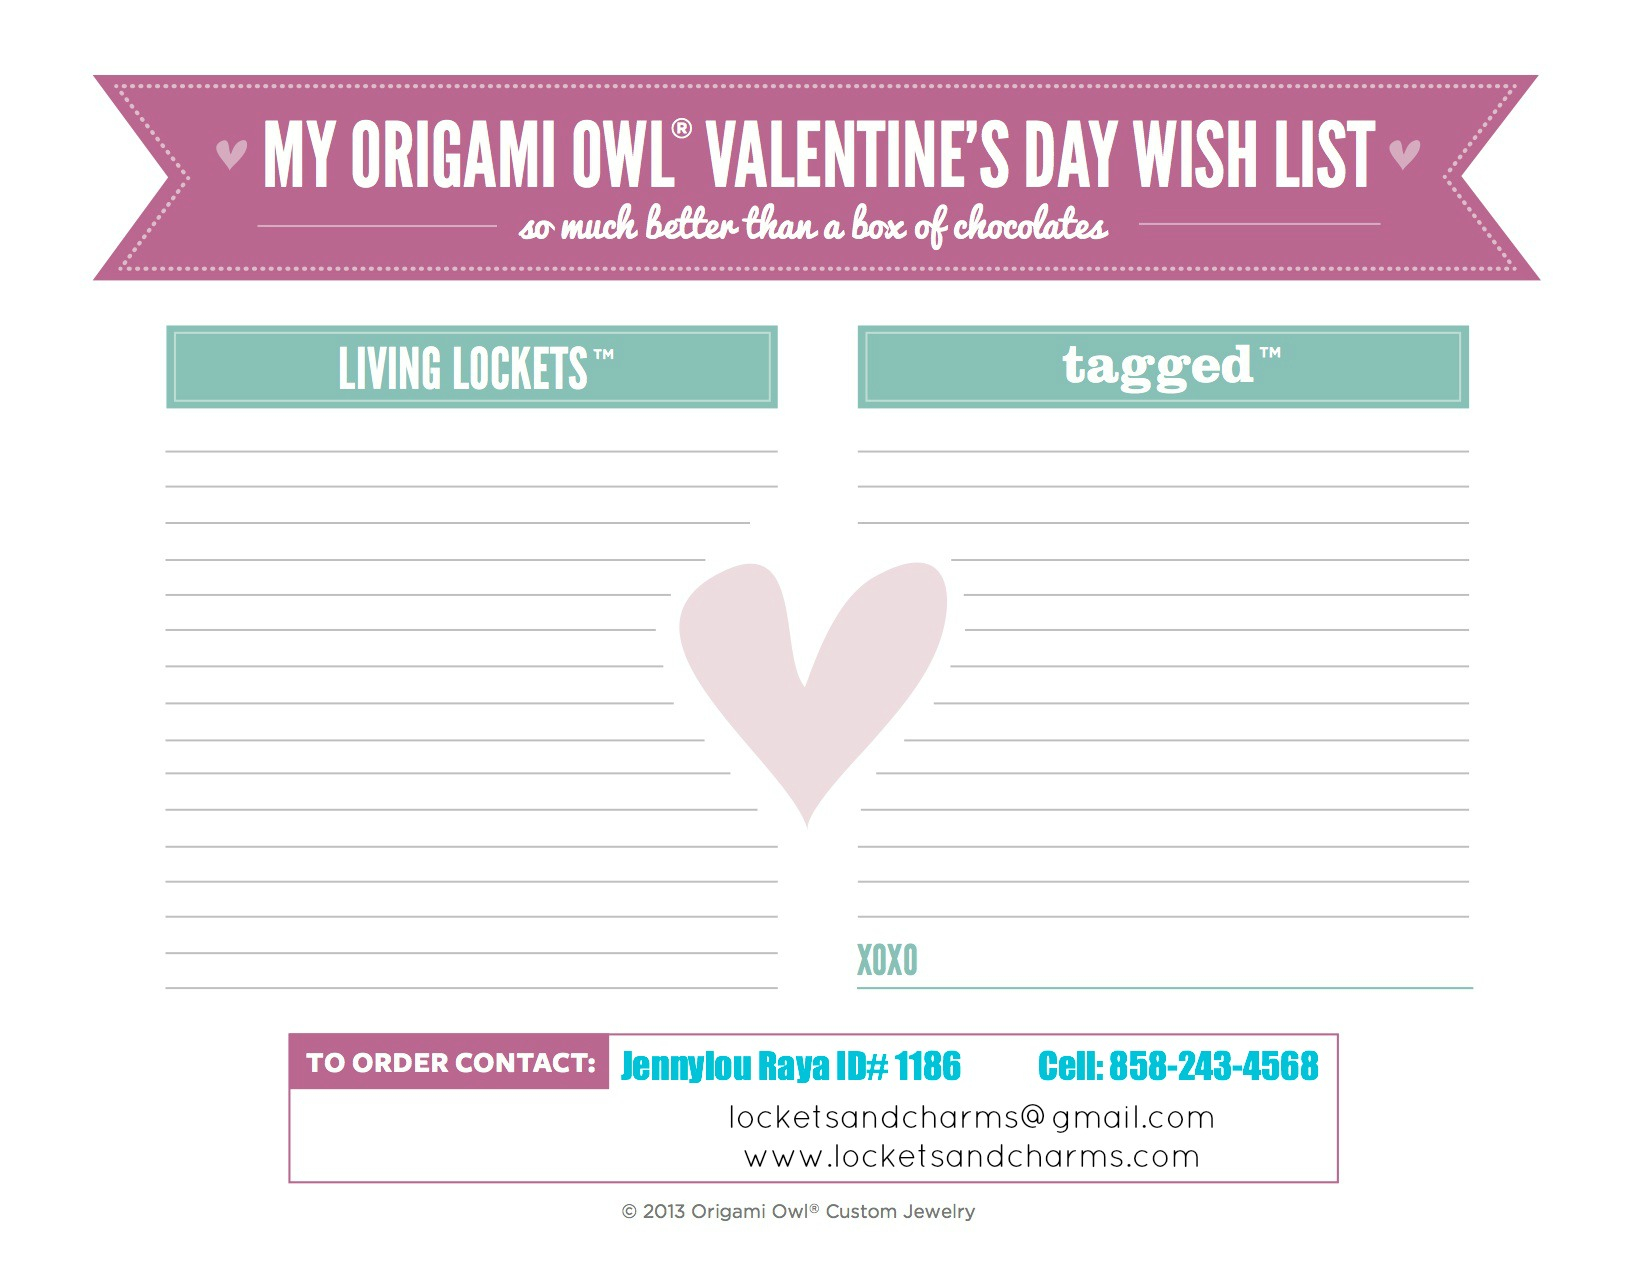 Origami Owl Order Form Origami Owl Living Lockets Valentine Customized Jewelry